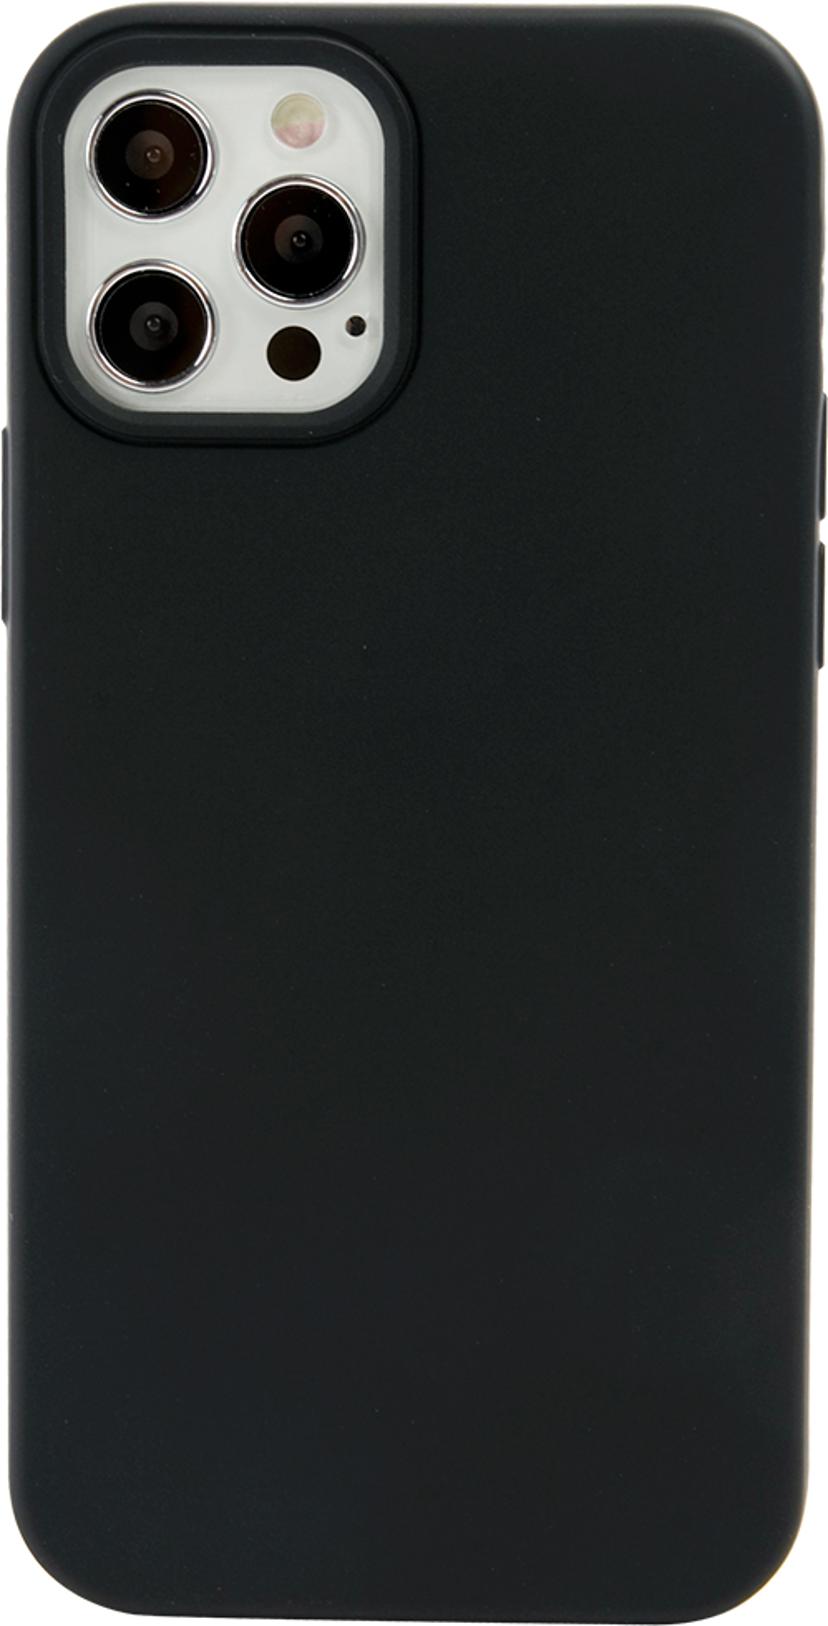 Cirafon Recycled Case iPhone 12, iPhone 12 Pro Musta